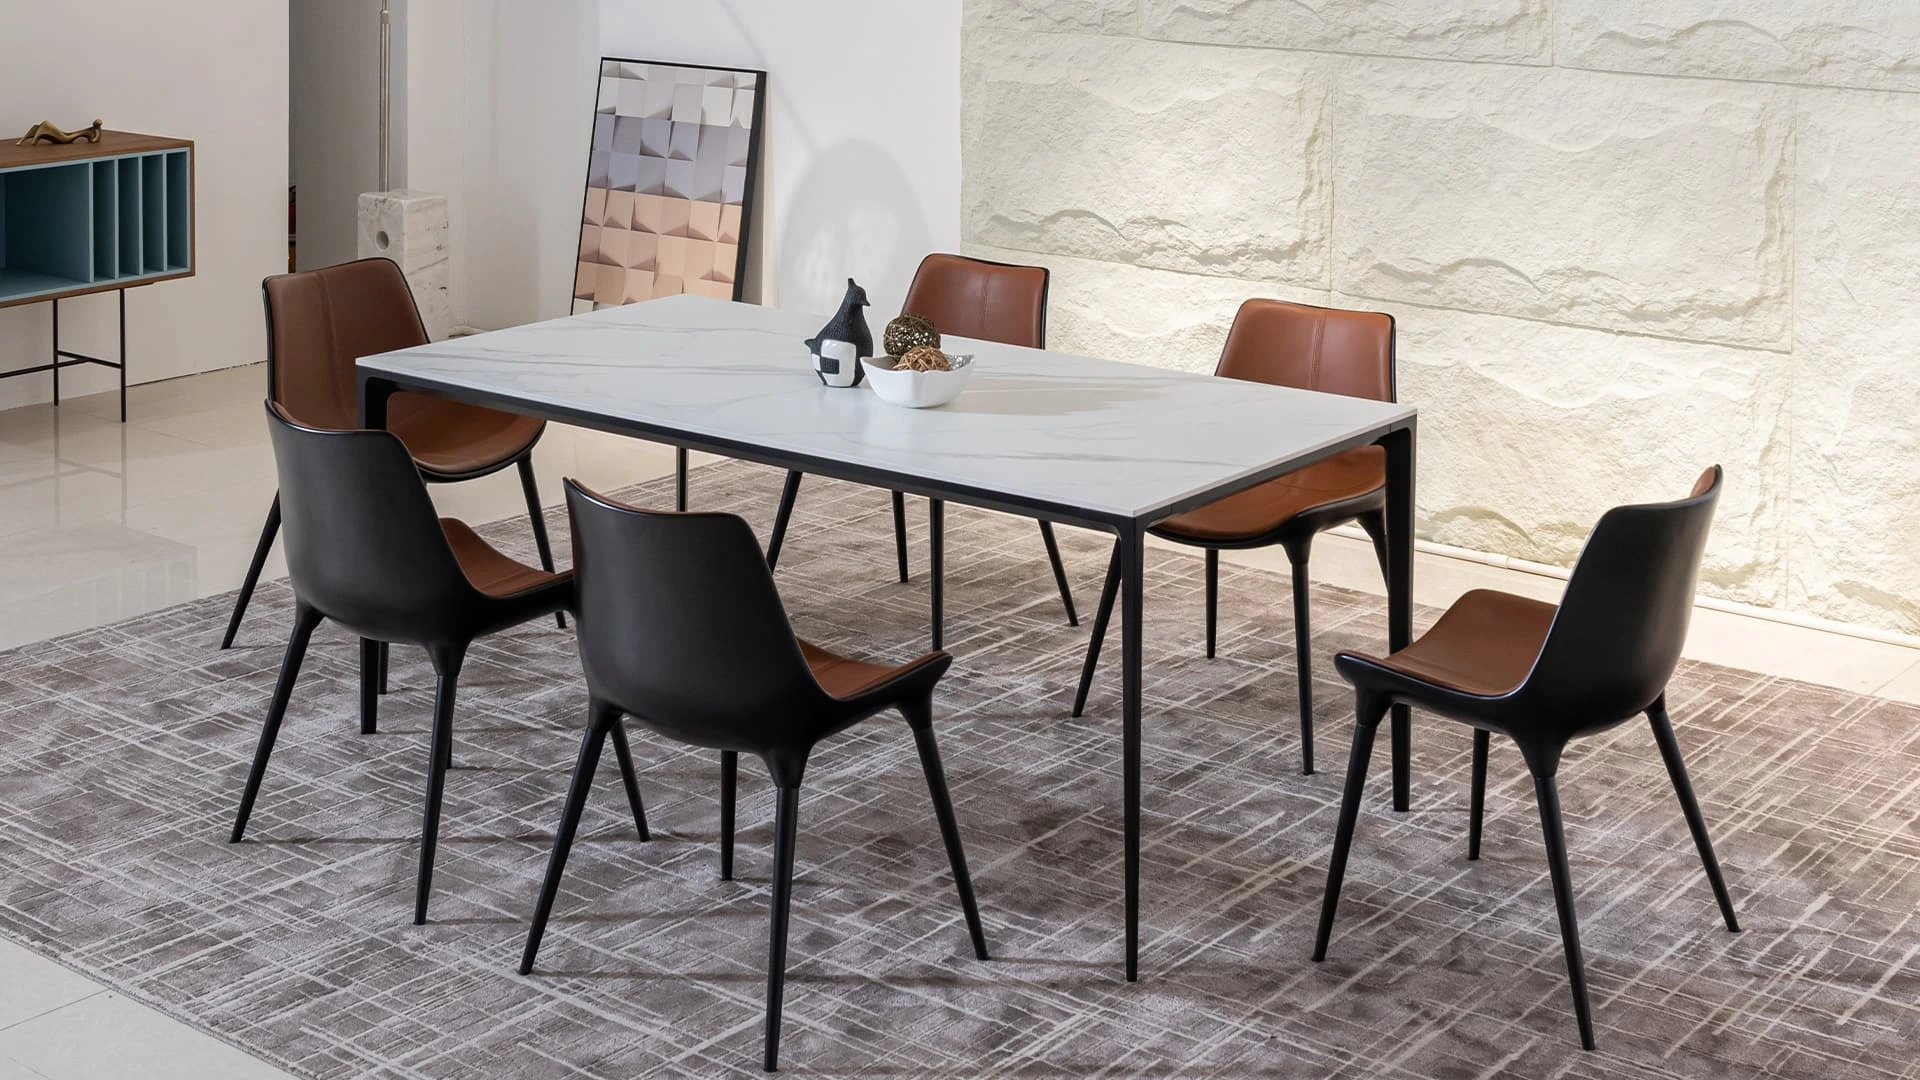 Innovation S moderni bijeli keramički stol za blagovanje Bk ciandre 2